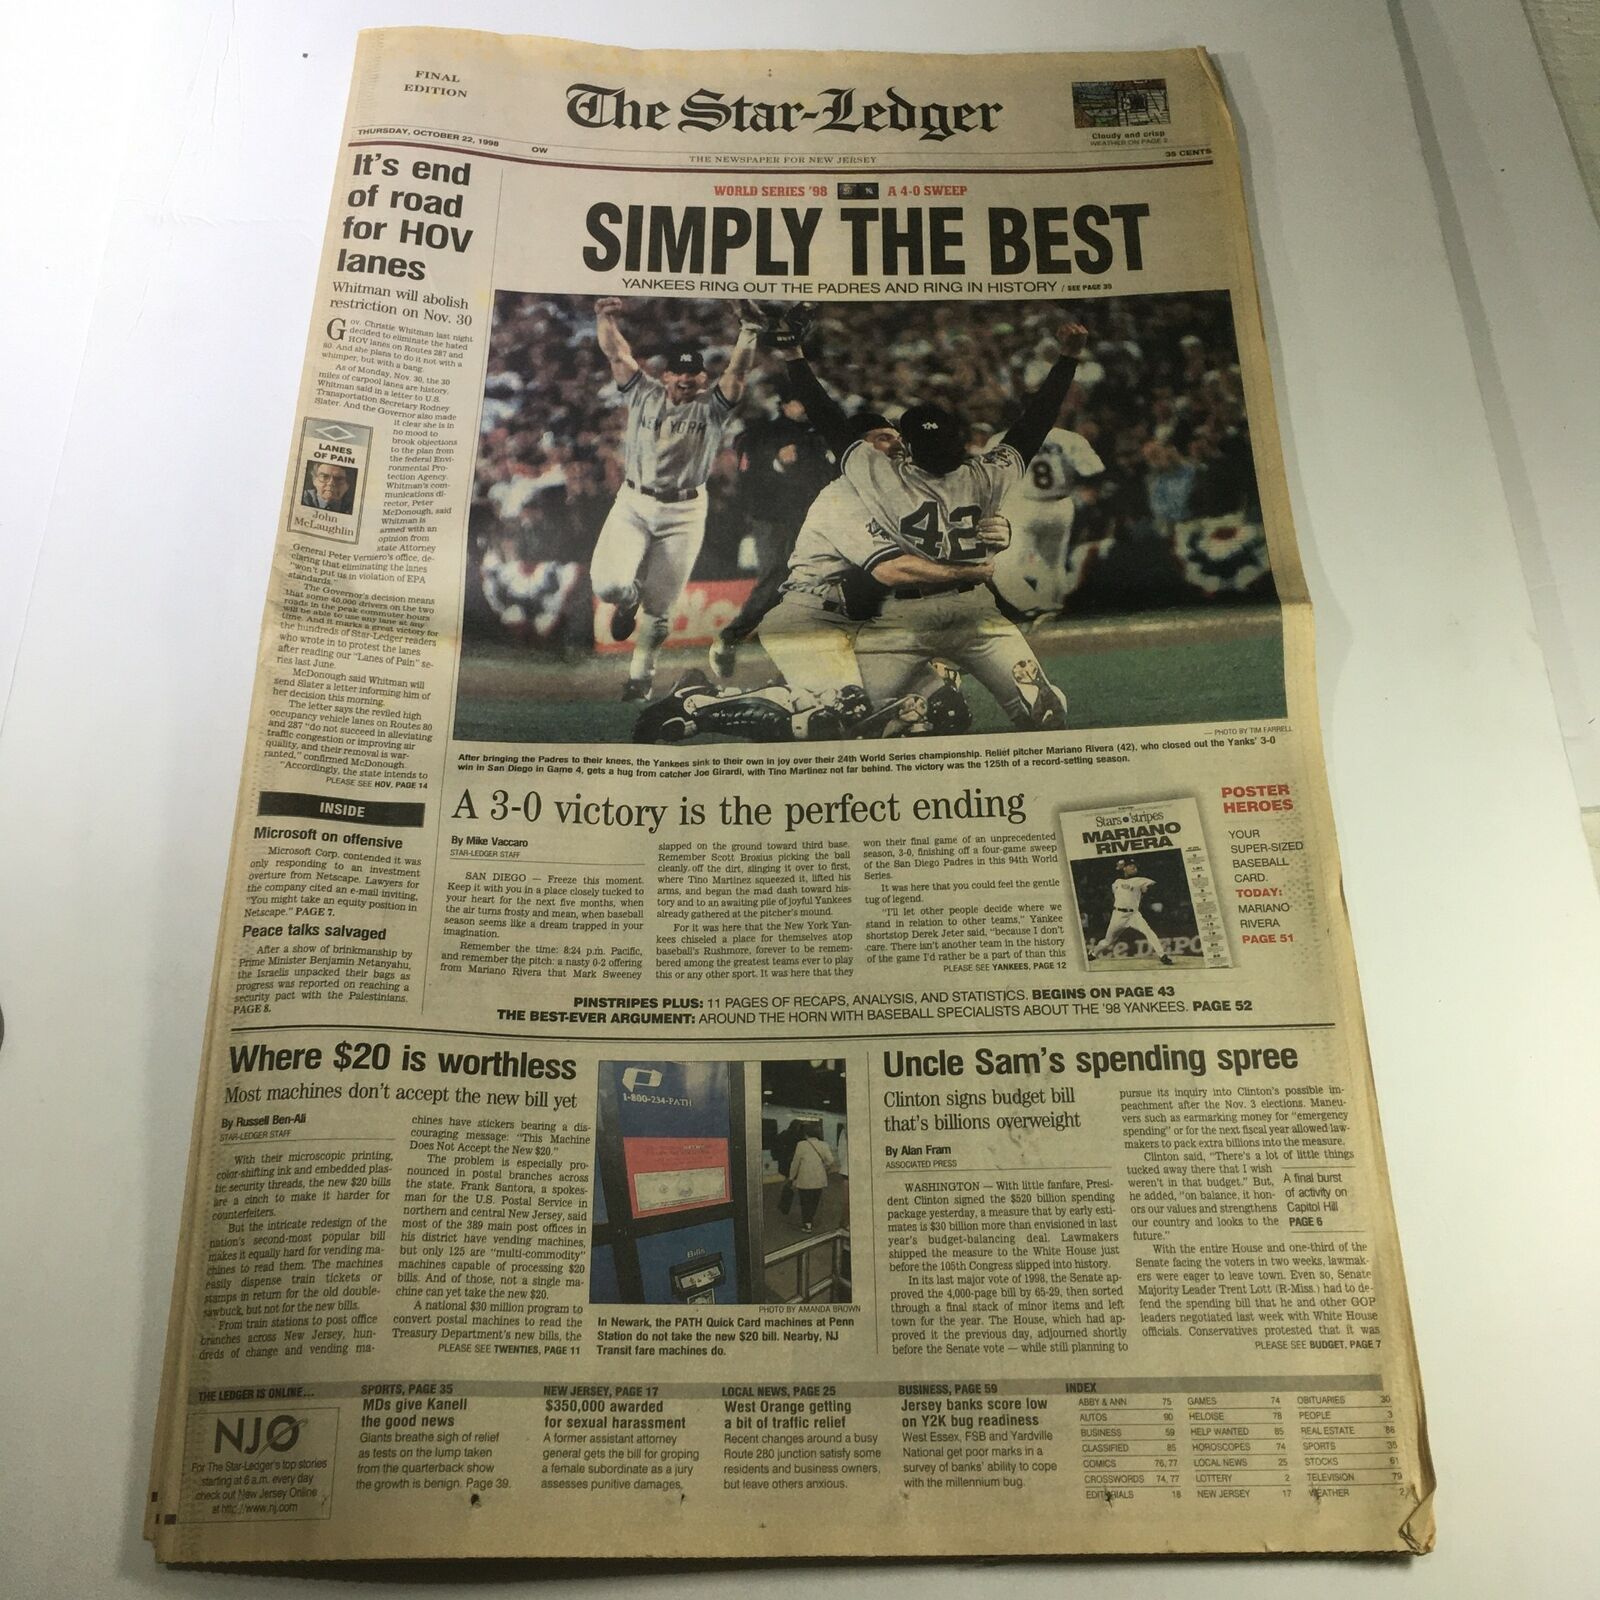 VTG The Star-Ledger Newspaper October 22 1998 - Joe Girardi / Tino Martinez